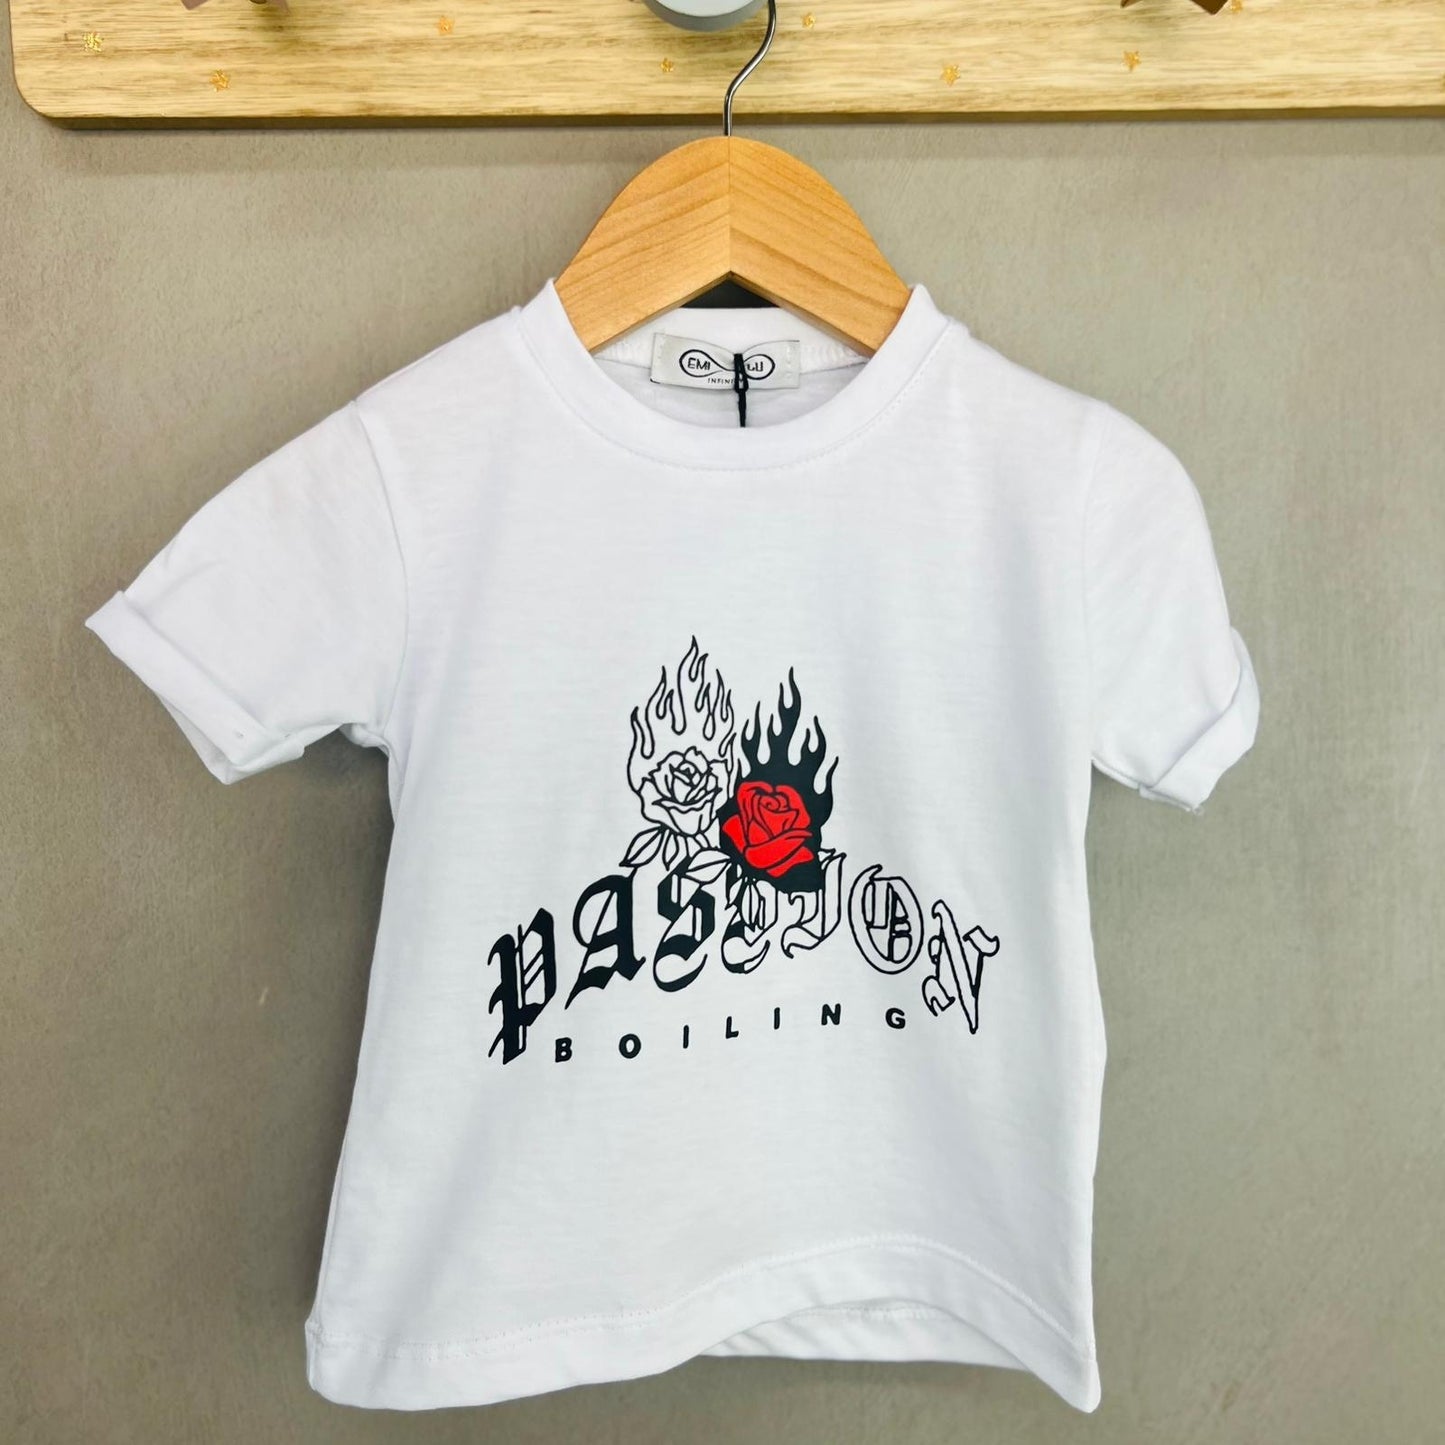 T-shirt stampata neonato - Mstore016